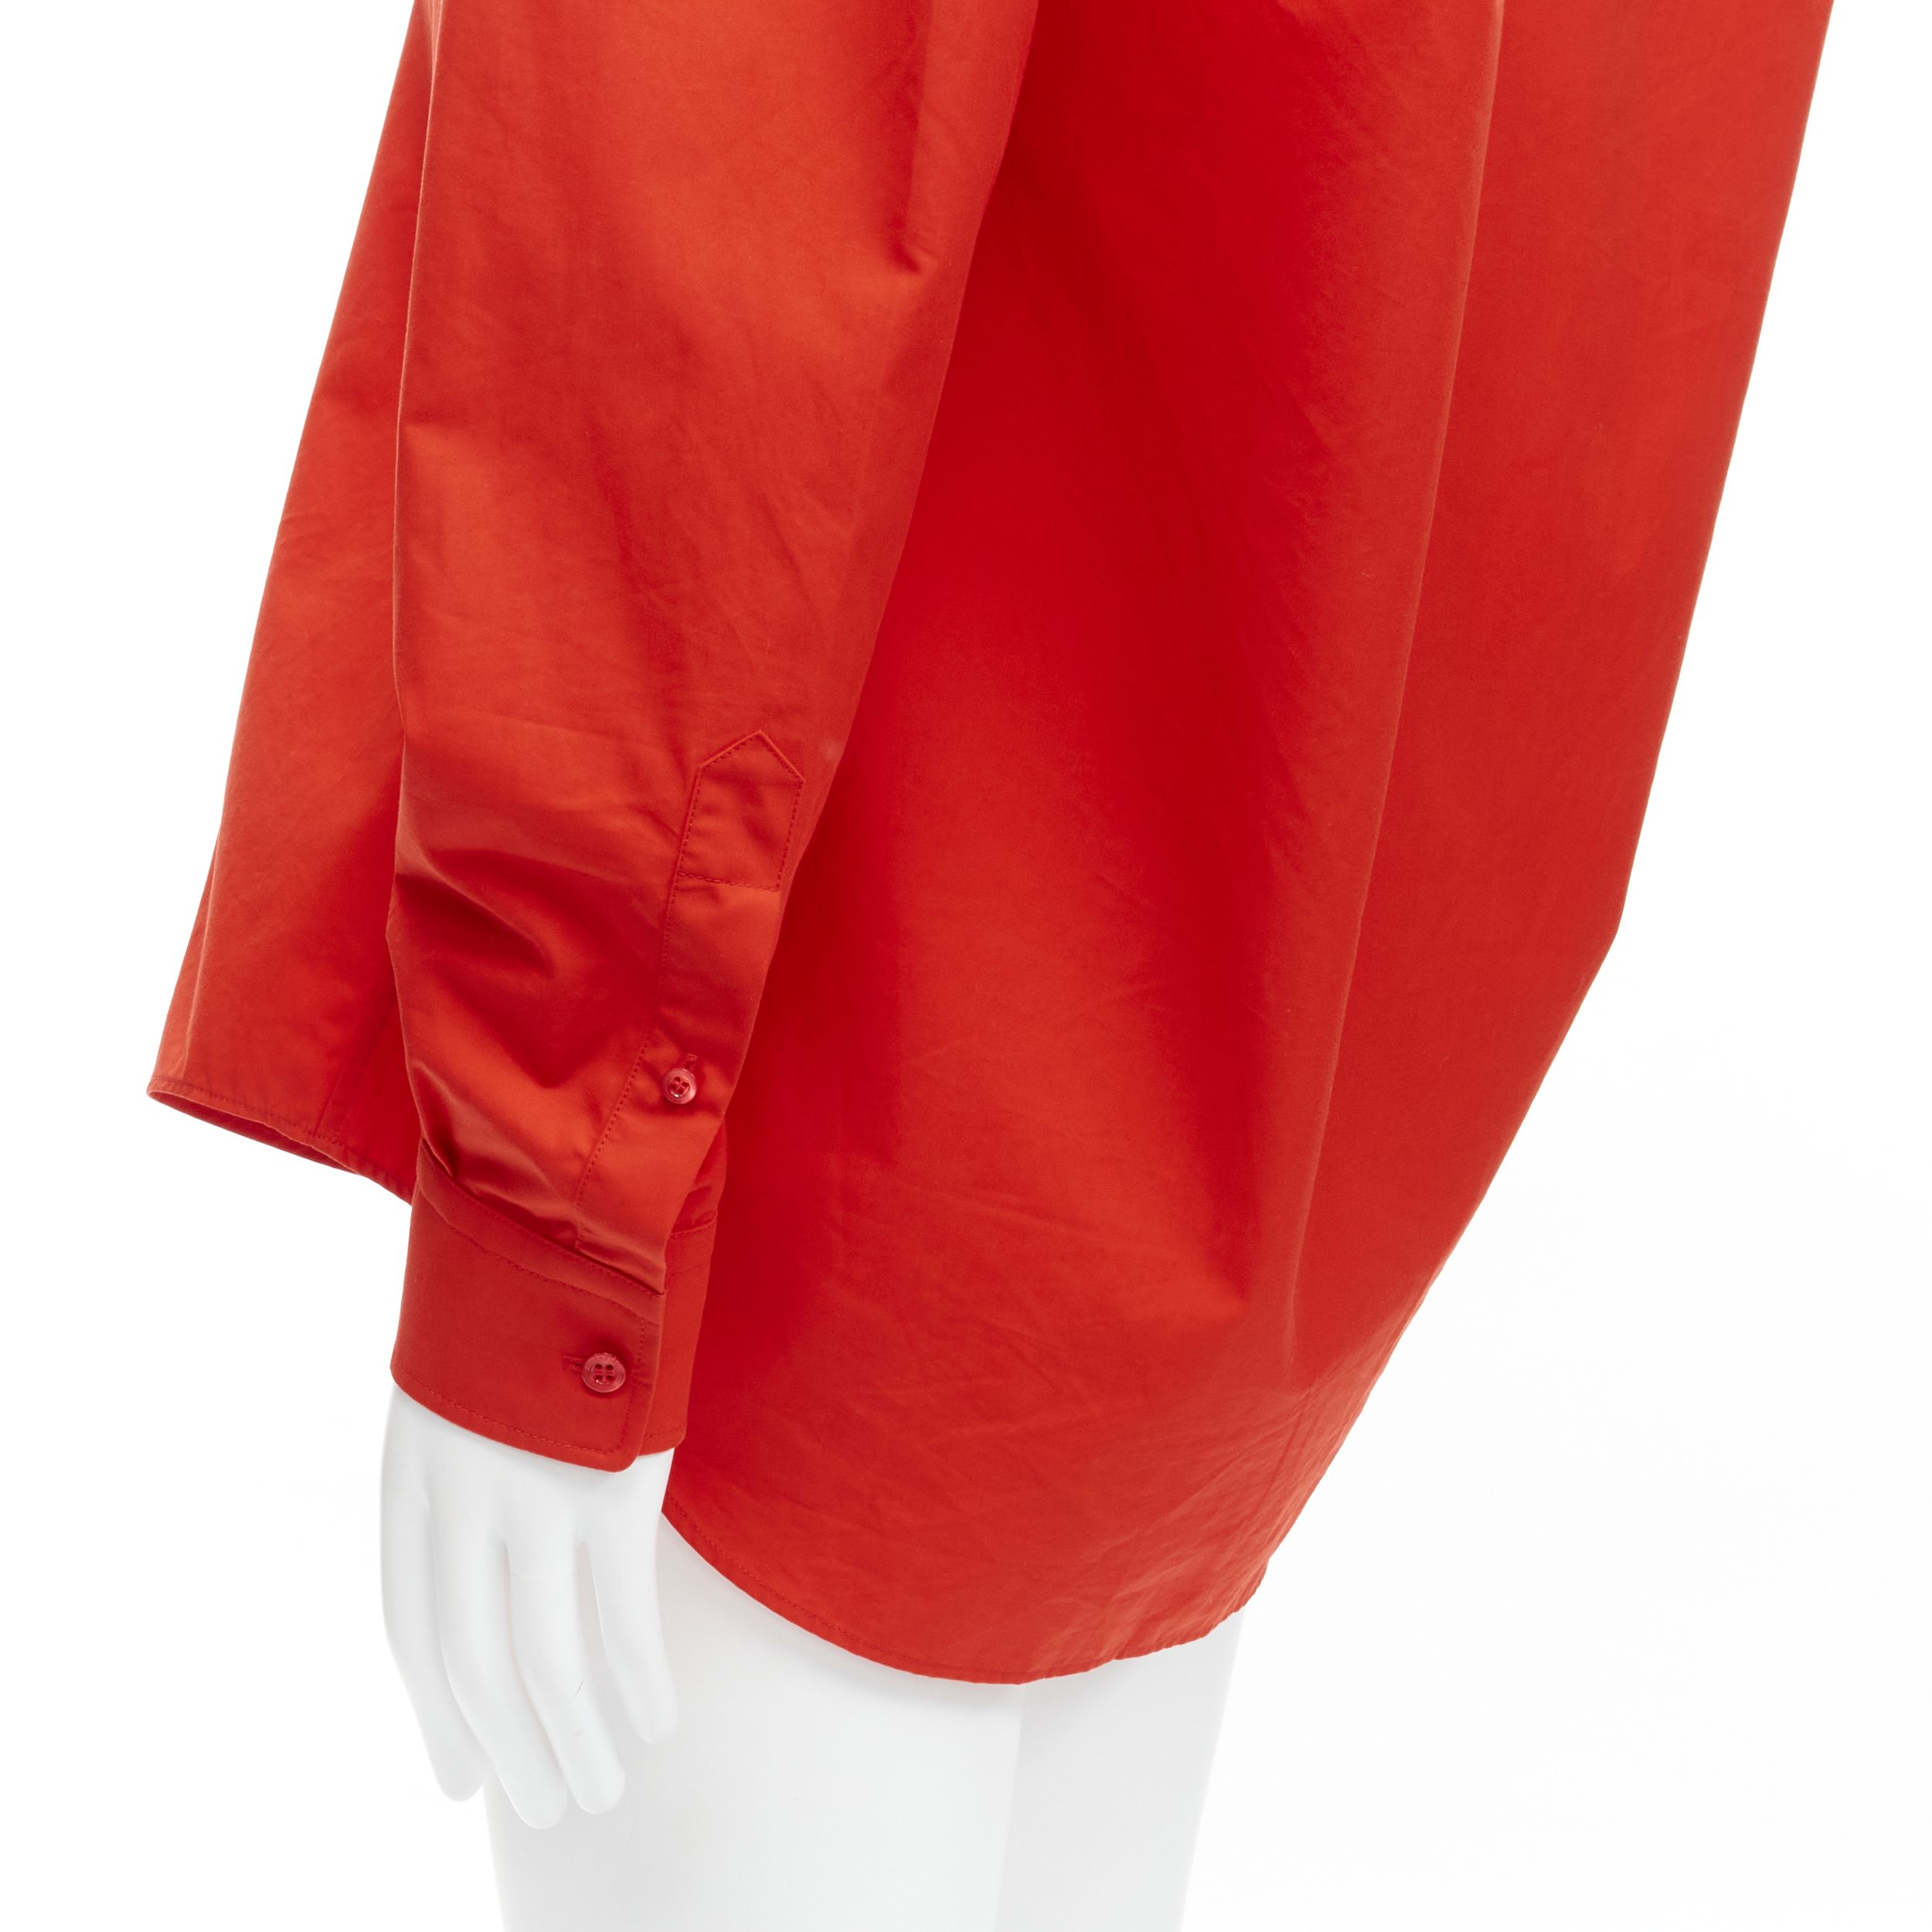 Balenciaga BALENCIAGA Cocoon red swing collar 3D cut oversized button down shirt Size M / US 6-8 / IT 42-44 - 7 Thumbnail